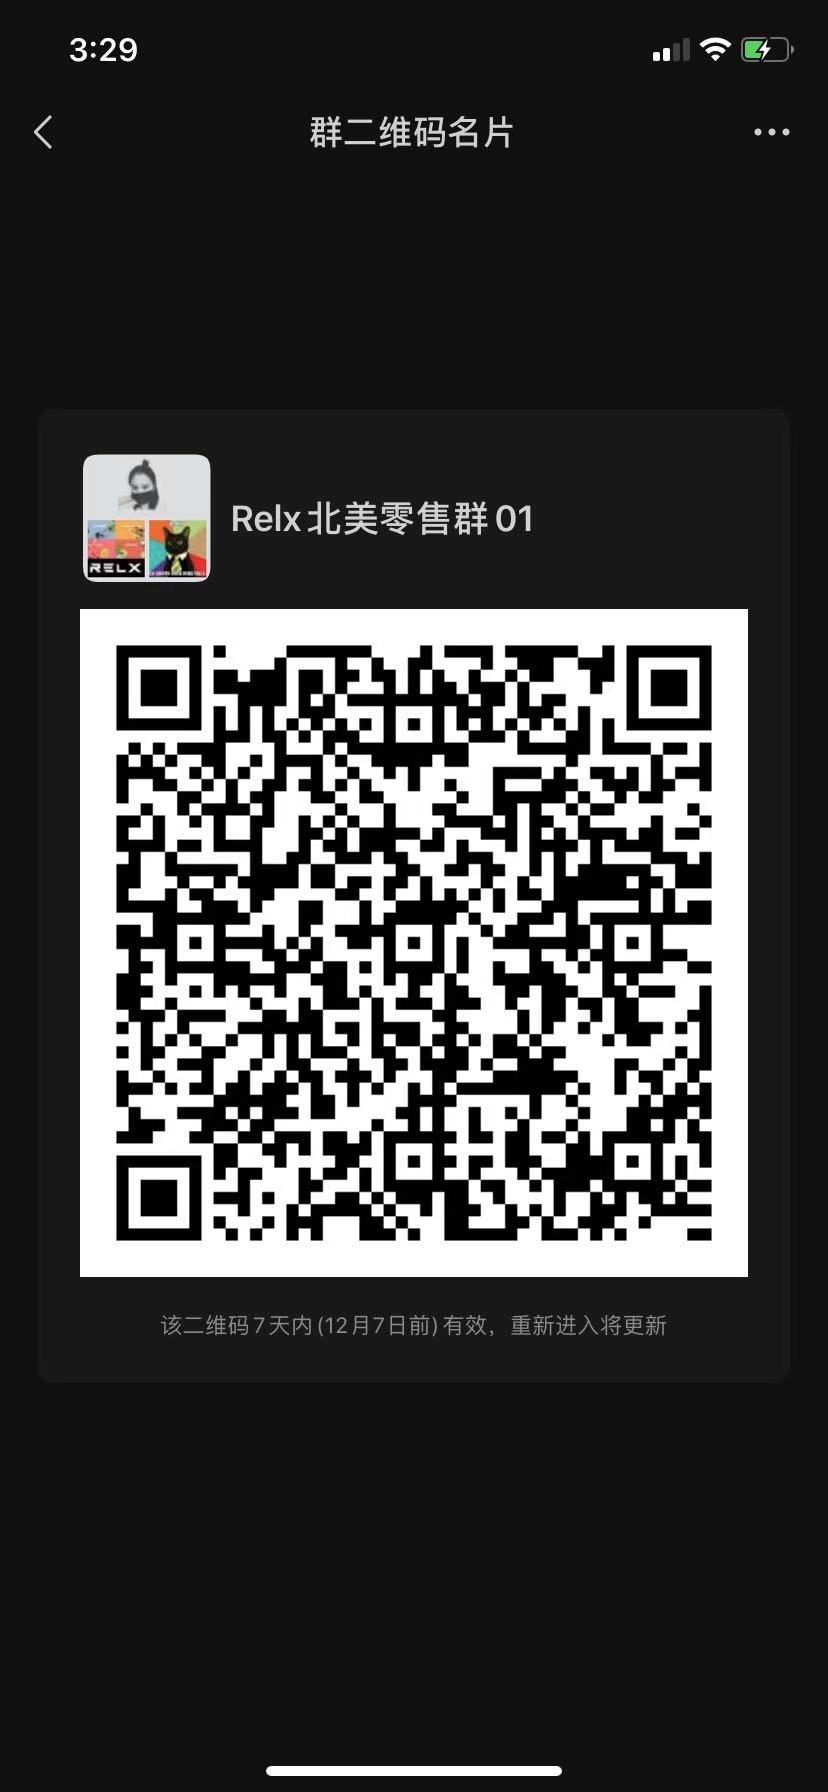 RELX 北美零售群 群主微信二维码